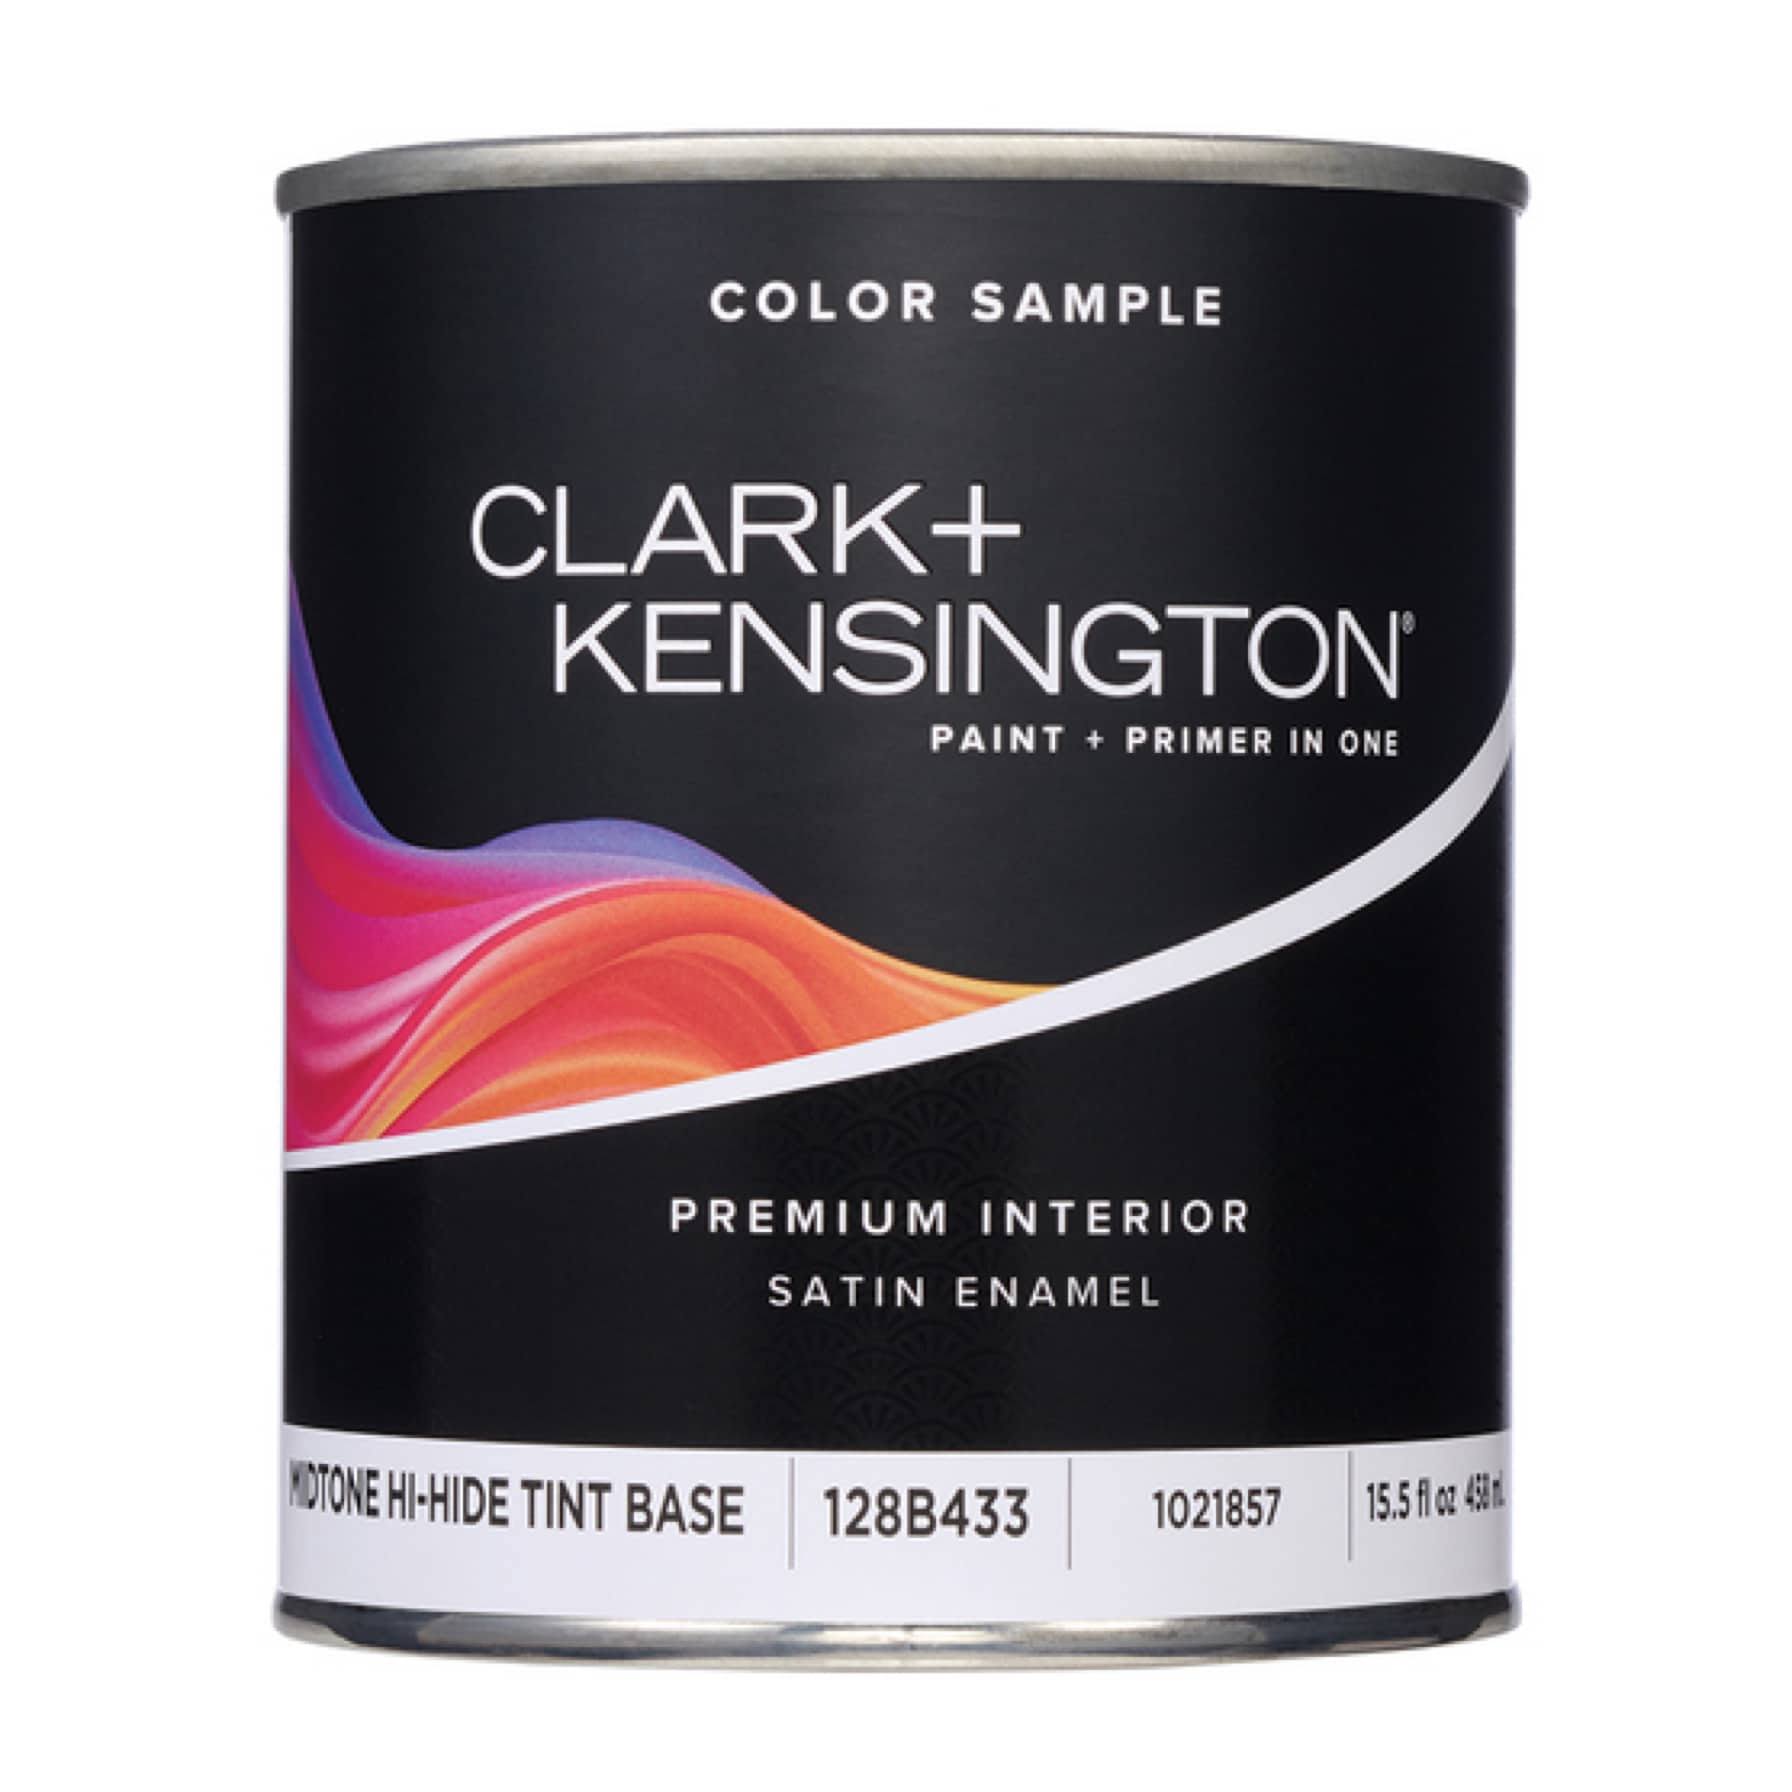 Clark+Kensington Tint Base Mid-tone Base Premium Paint 1 Pt.